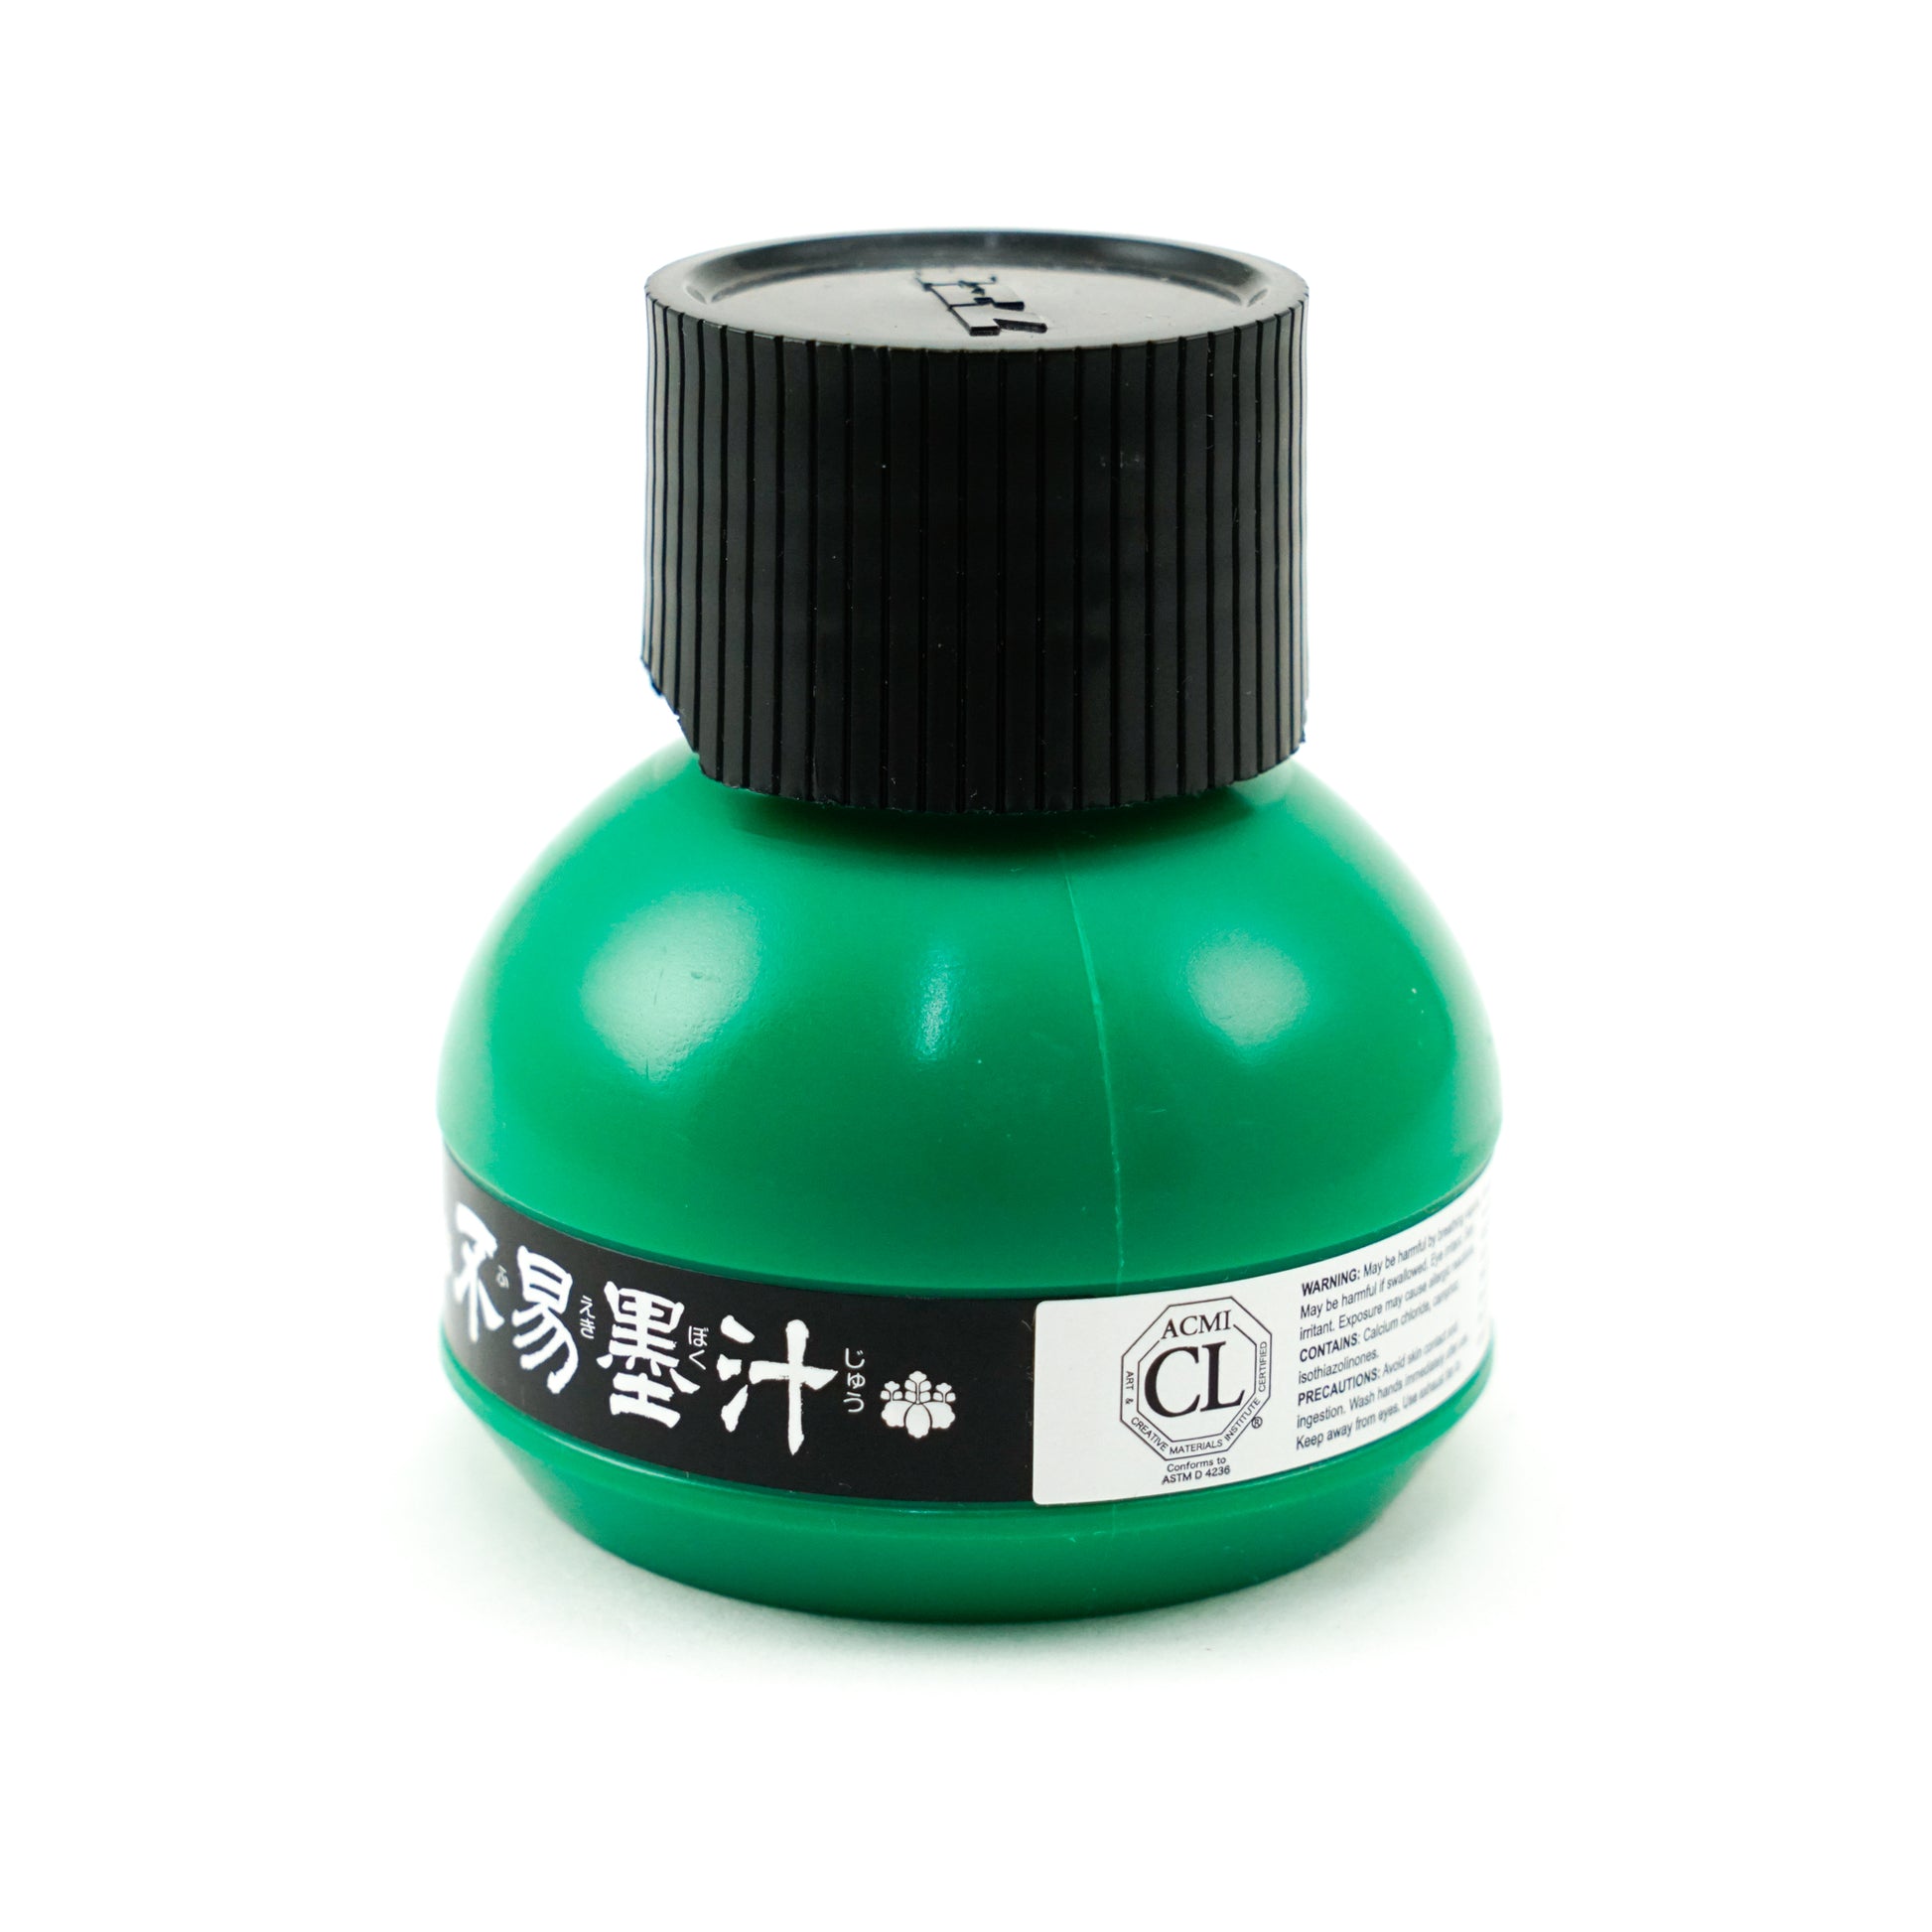 2 Oz Black Liquid Sumi Ink (KF2) – Yasutomo